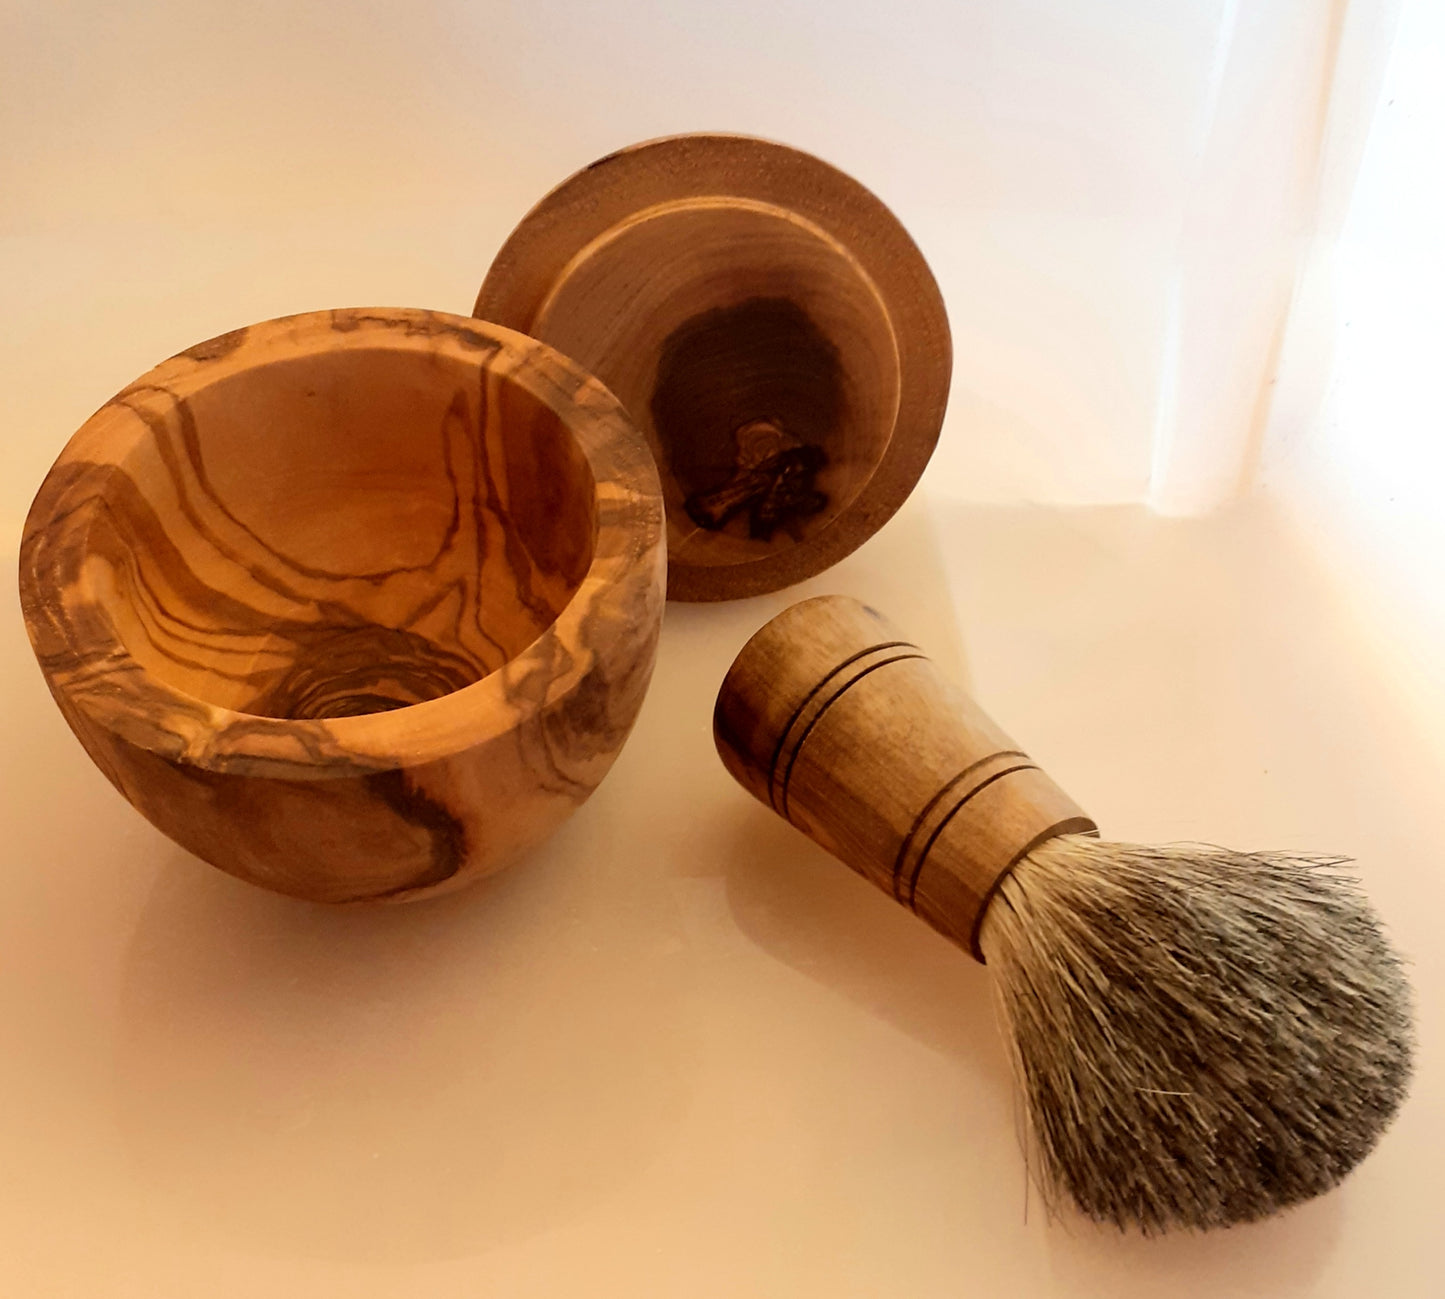 Shaving brush set